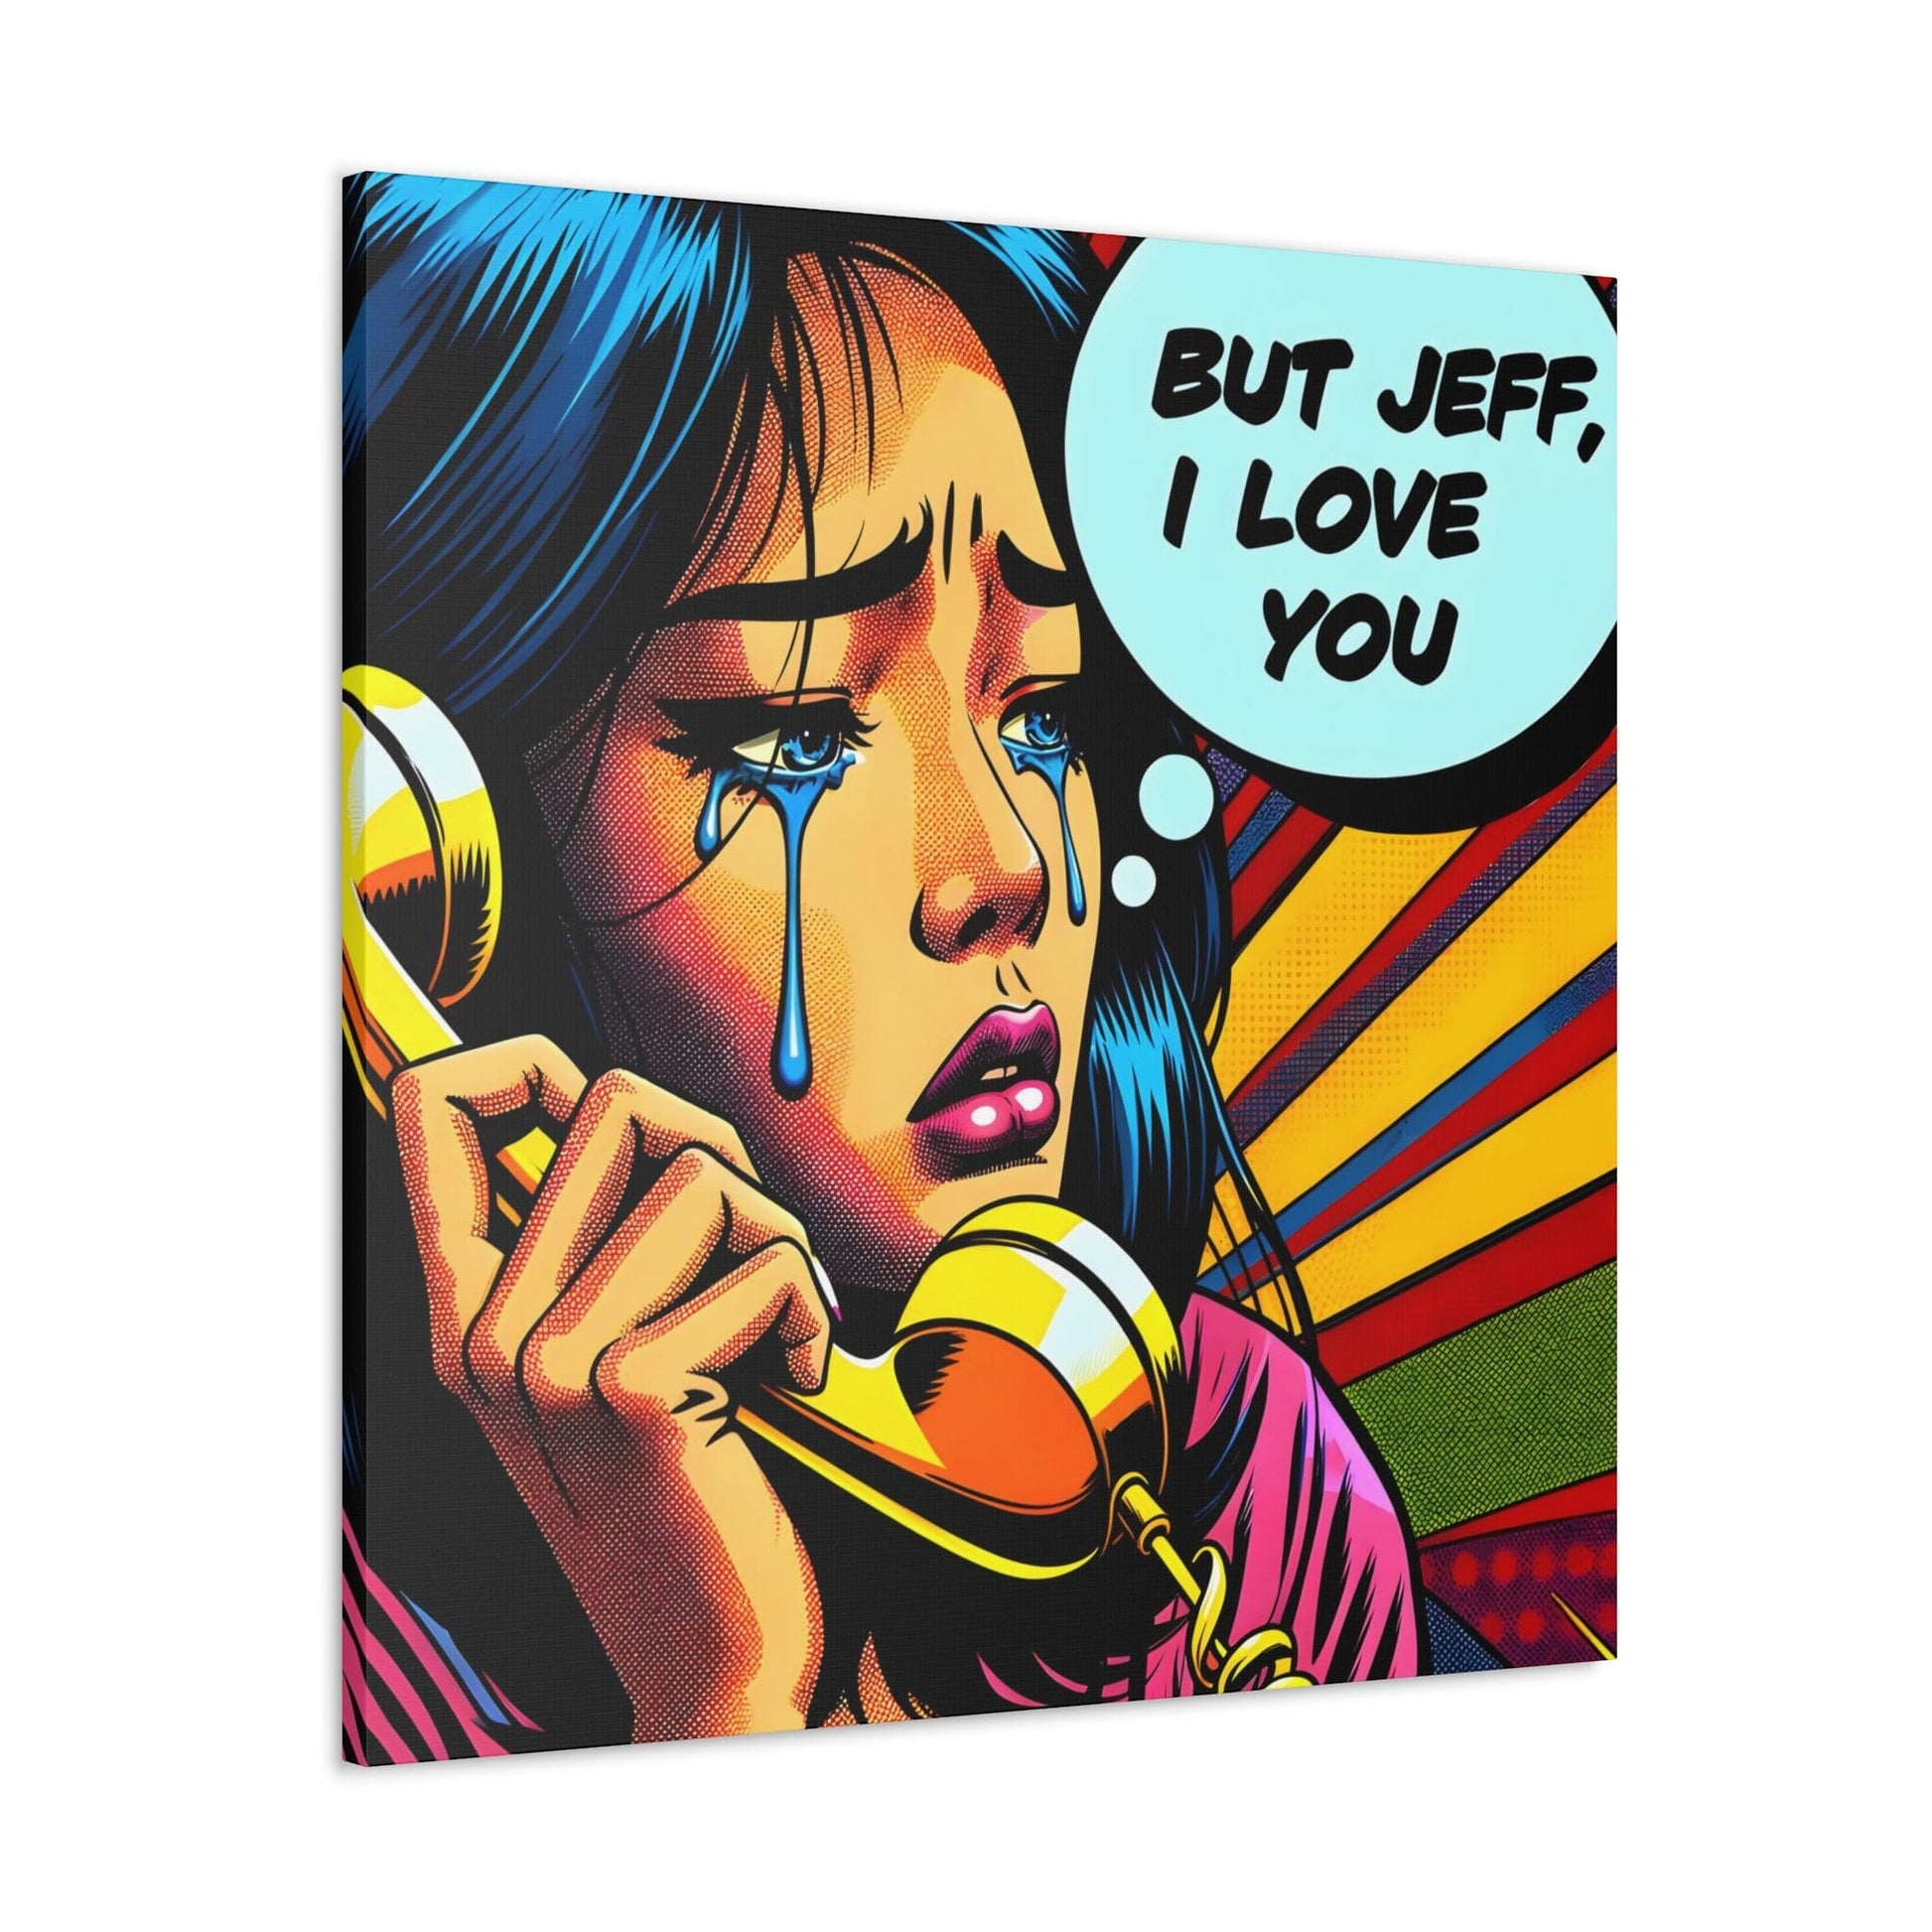 Jasper Monroe. But Jeff, I love You. Exclusive Canvas Print